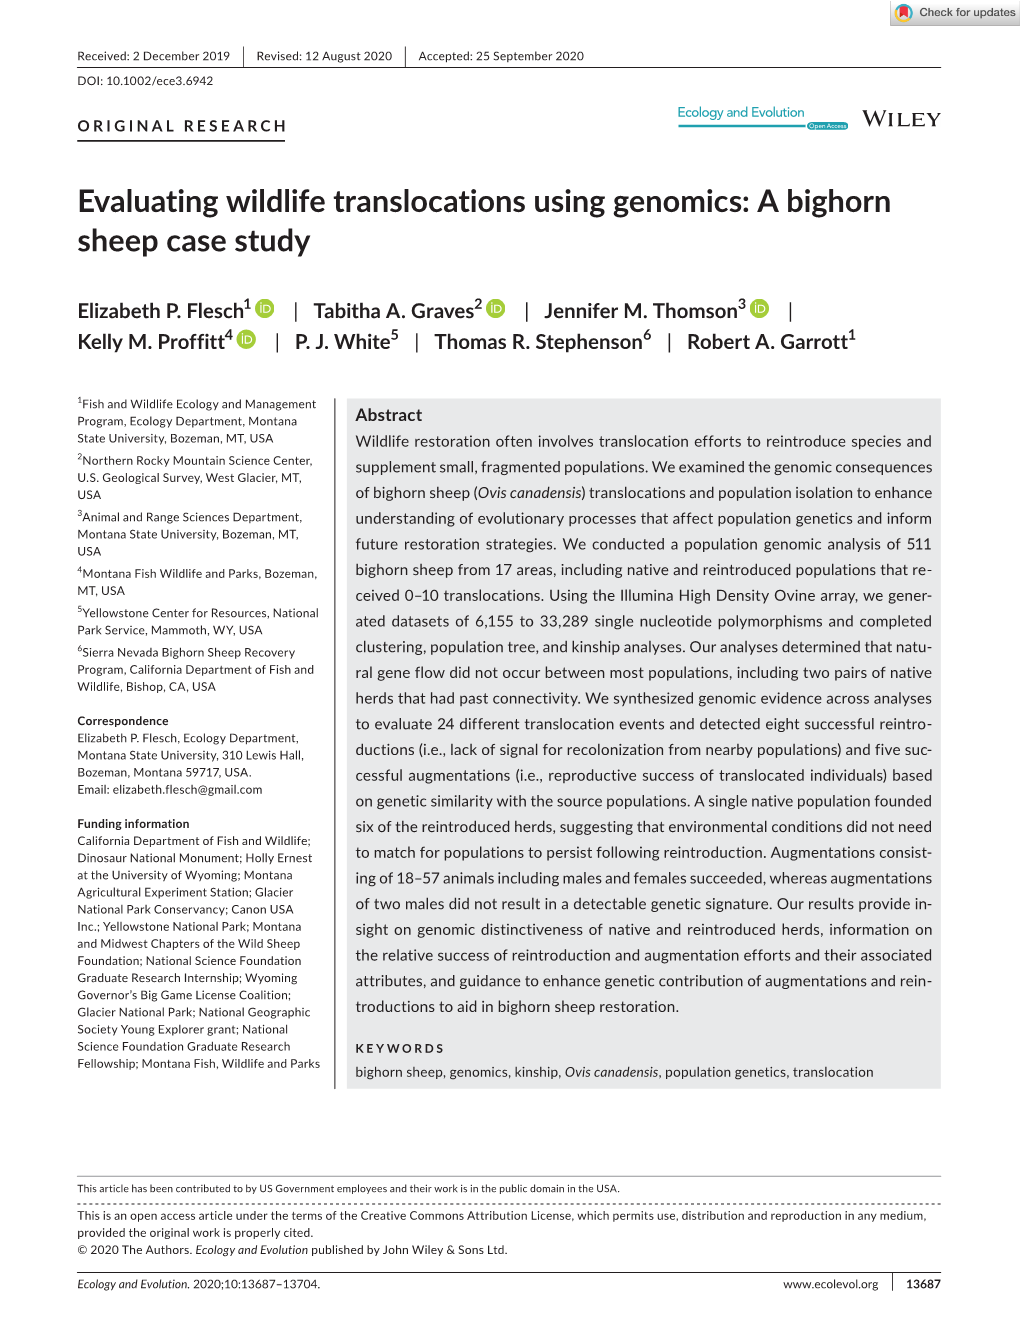 Evaluating Wildlife Translocations Using Genomics: a Bighorn Sheep Case Study